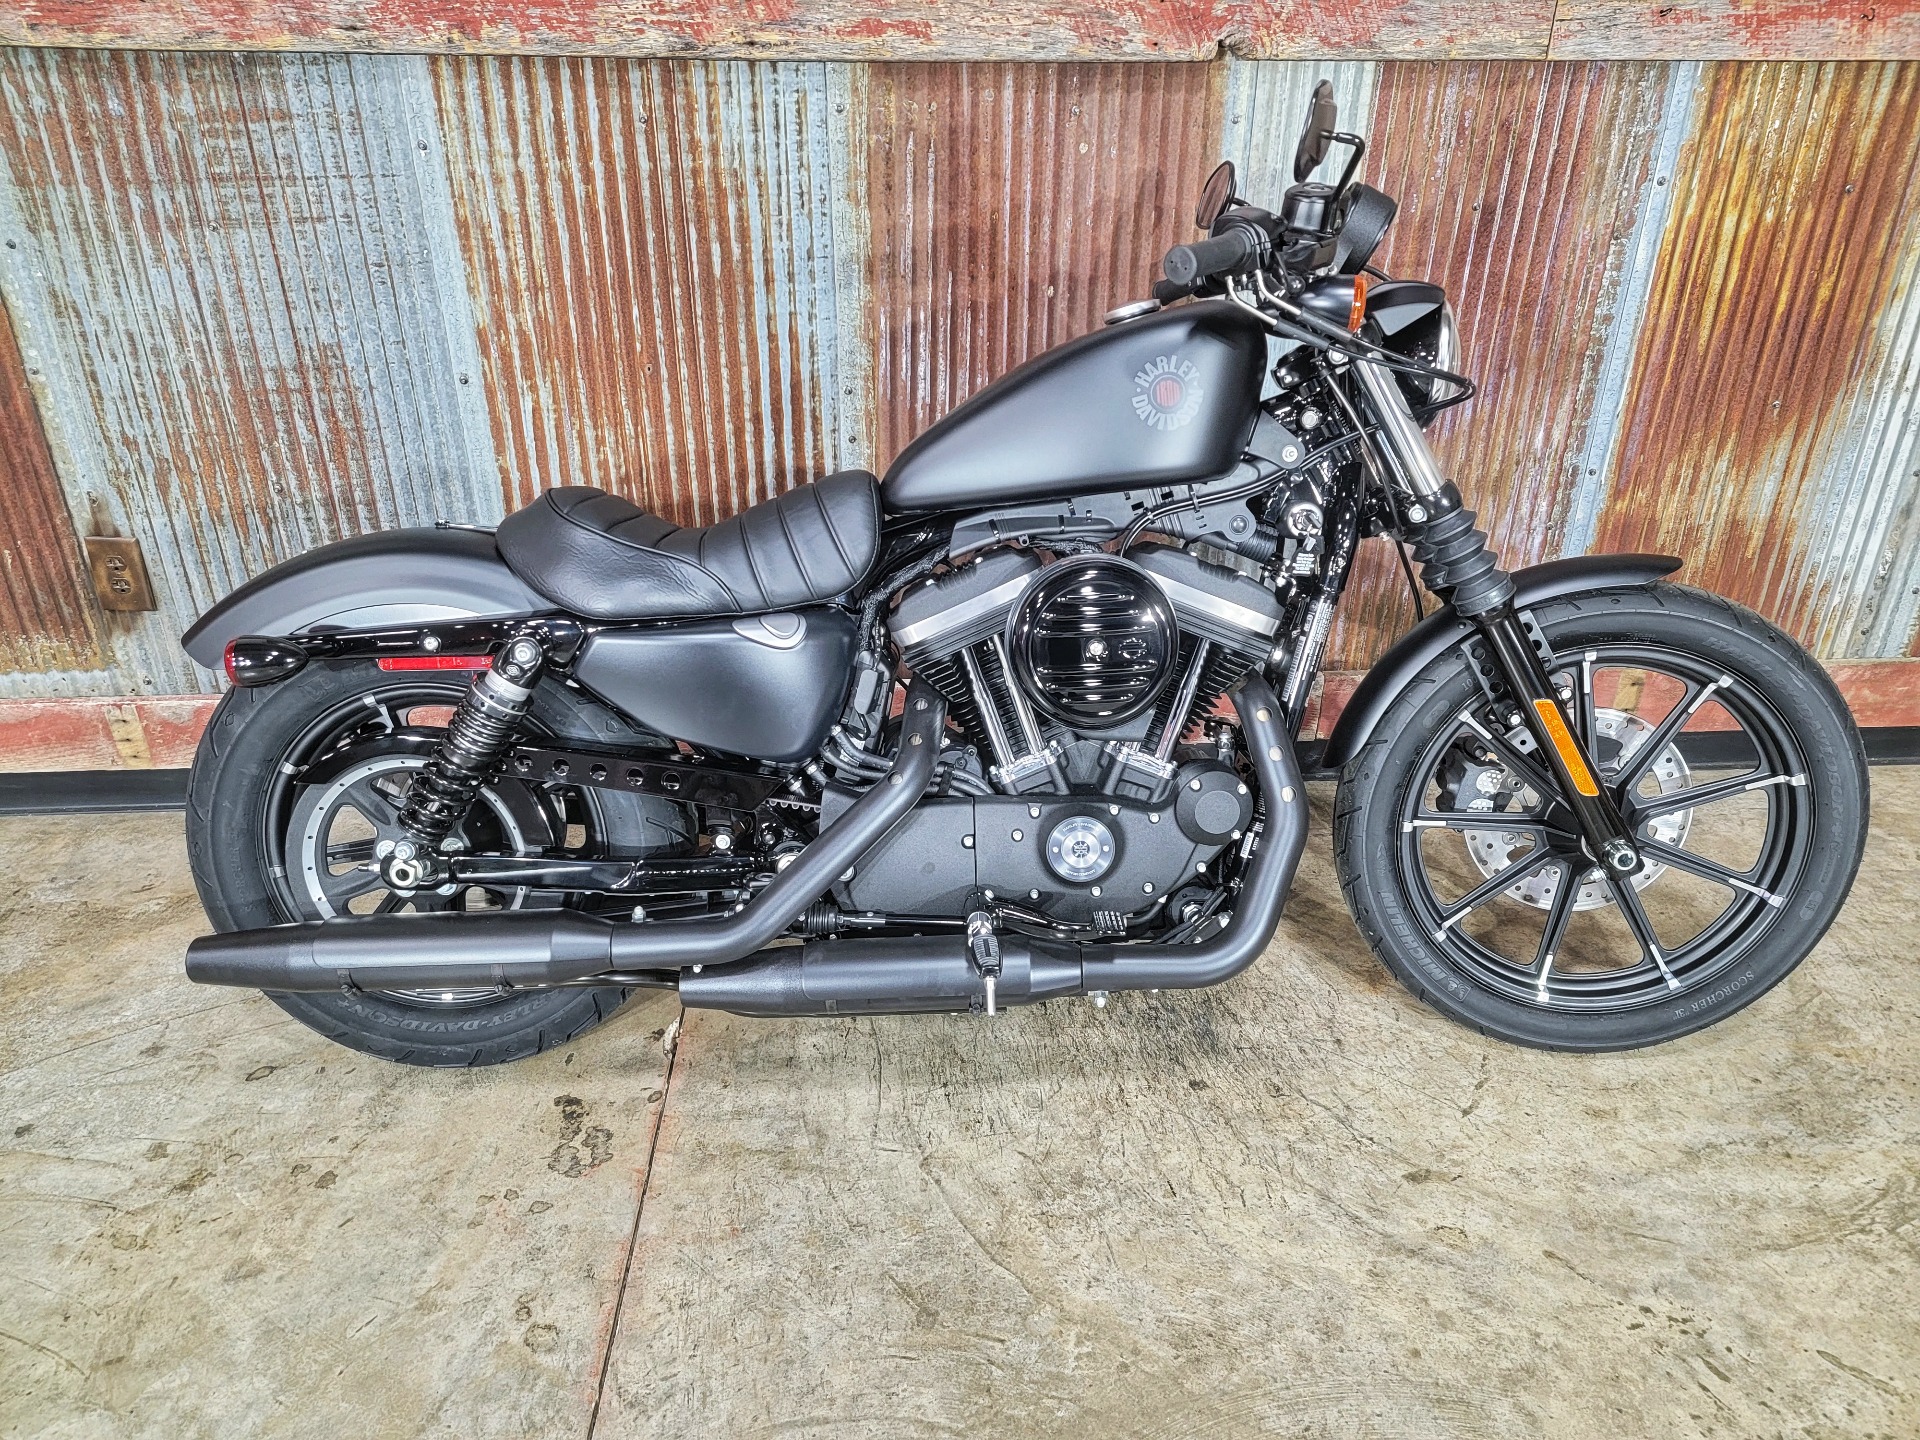 New 2021 Harley Davidson Iron 883 Black Denim Motorcycles In Chippewa Falls Wi Xl409405